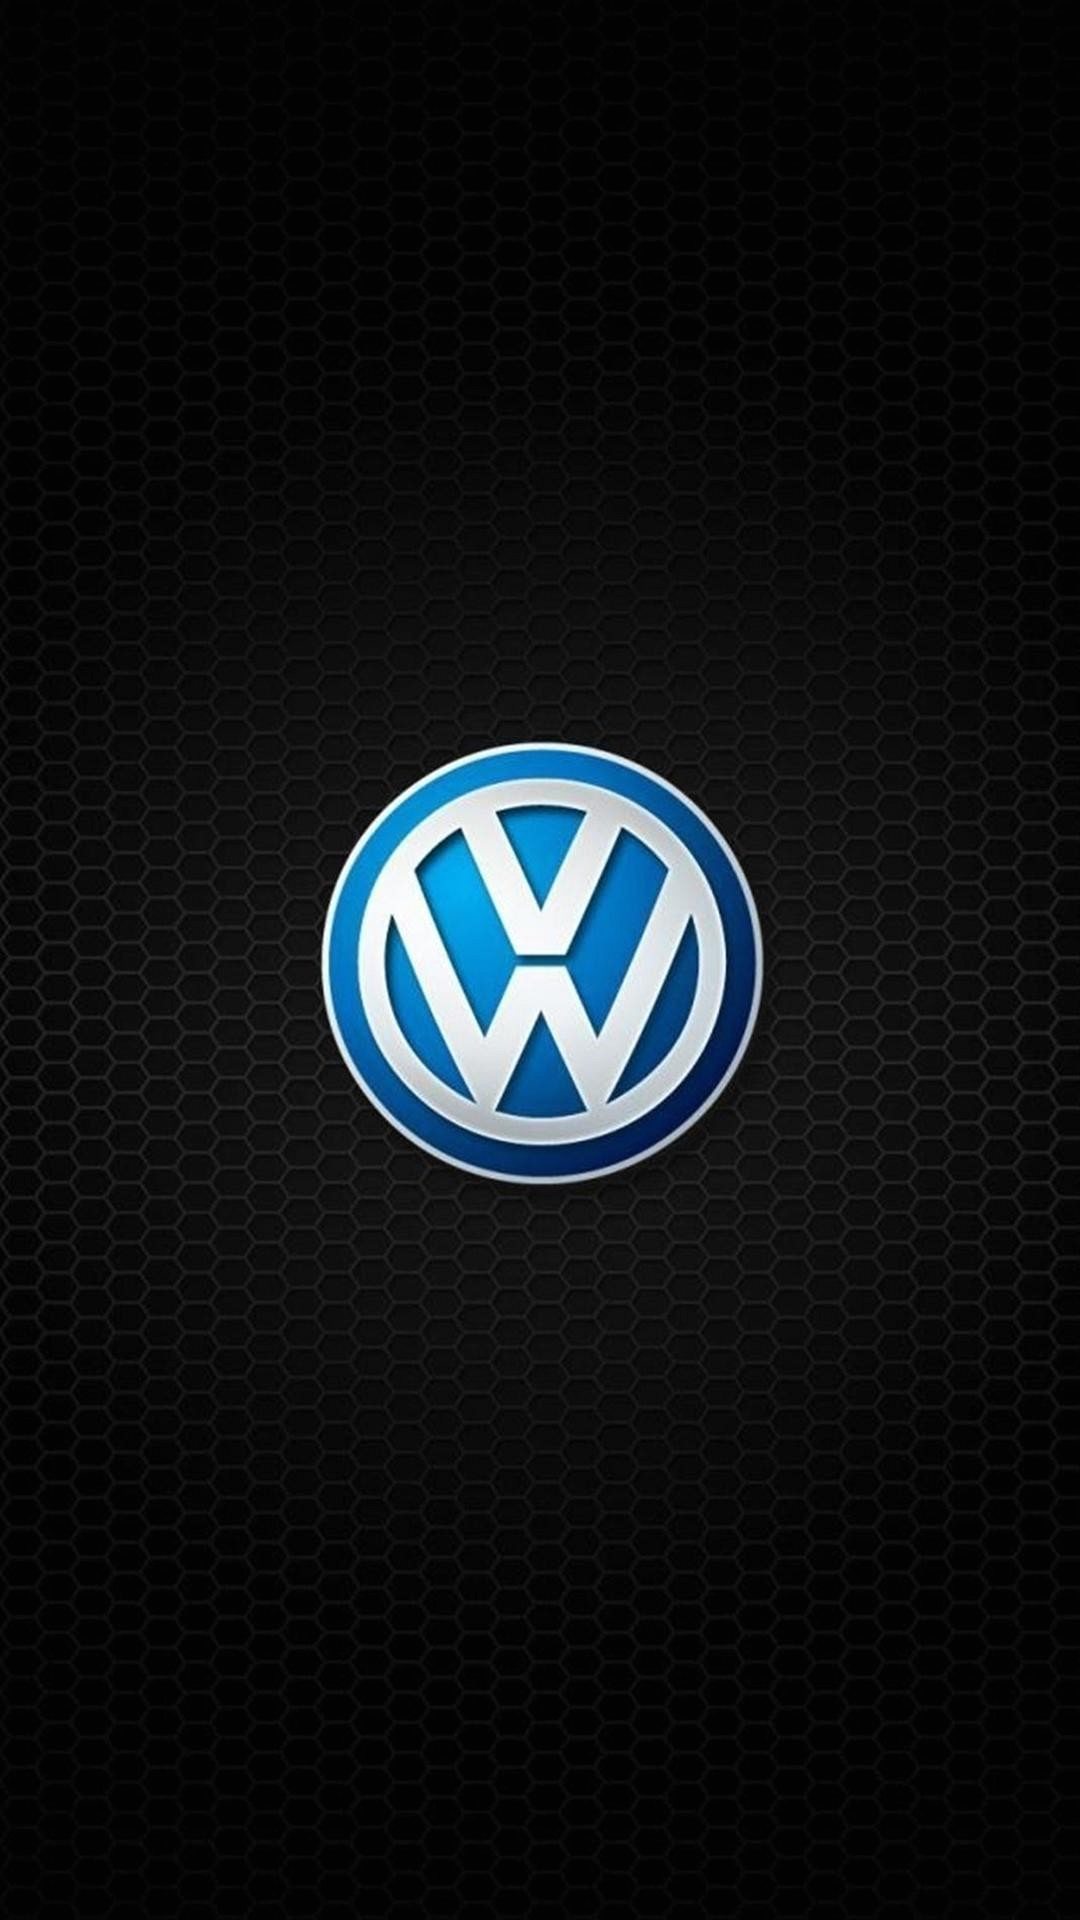 wallpaper-full-hd-1080-x-1920-smartphone-volkswagen-logo-symbol